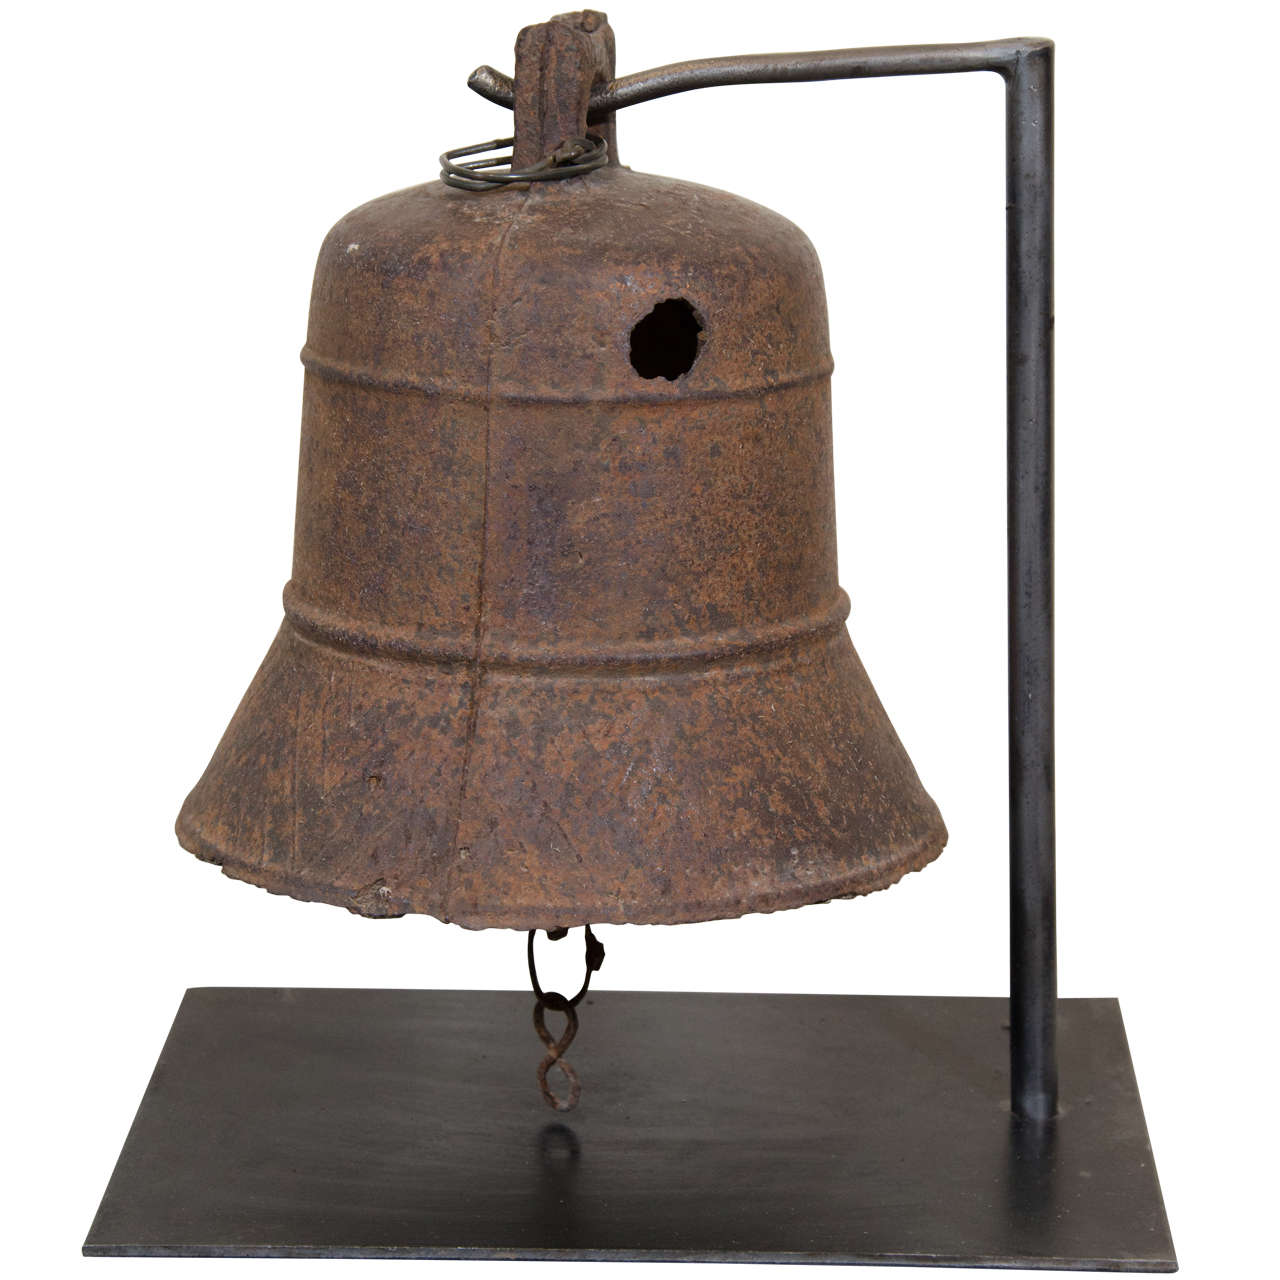 How do I hang a cast iron bell?